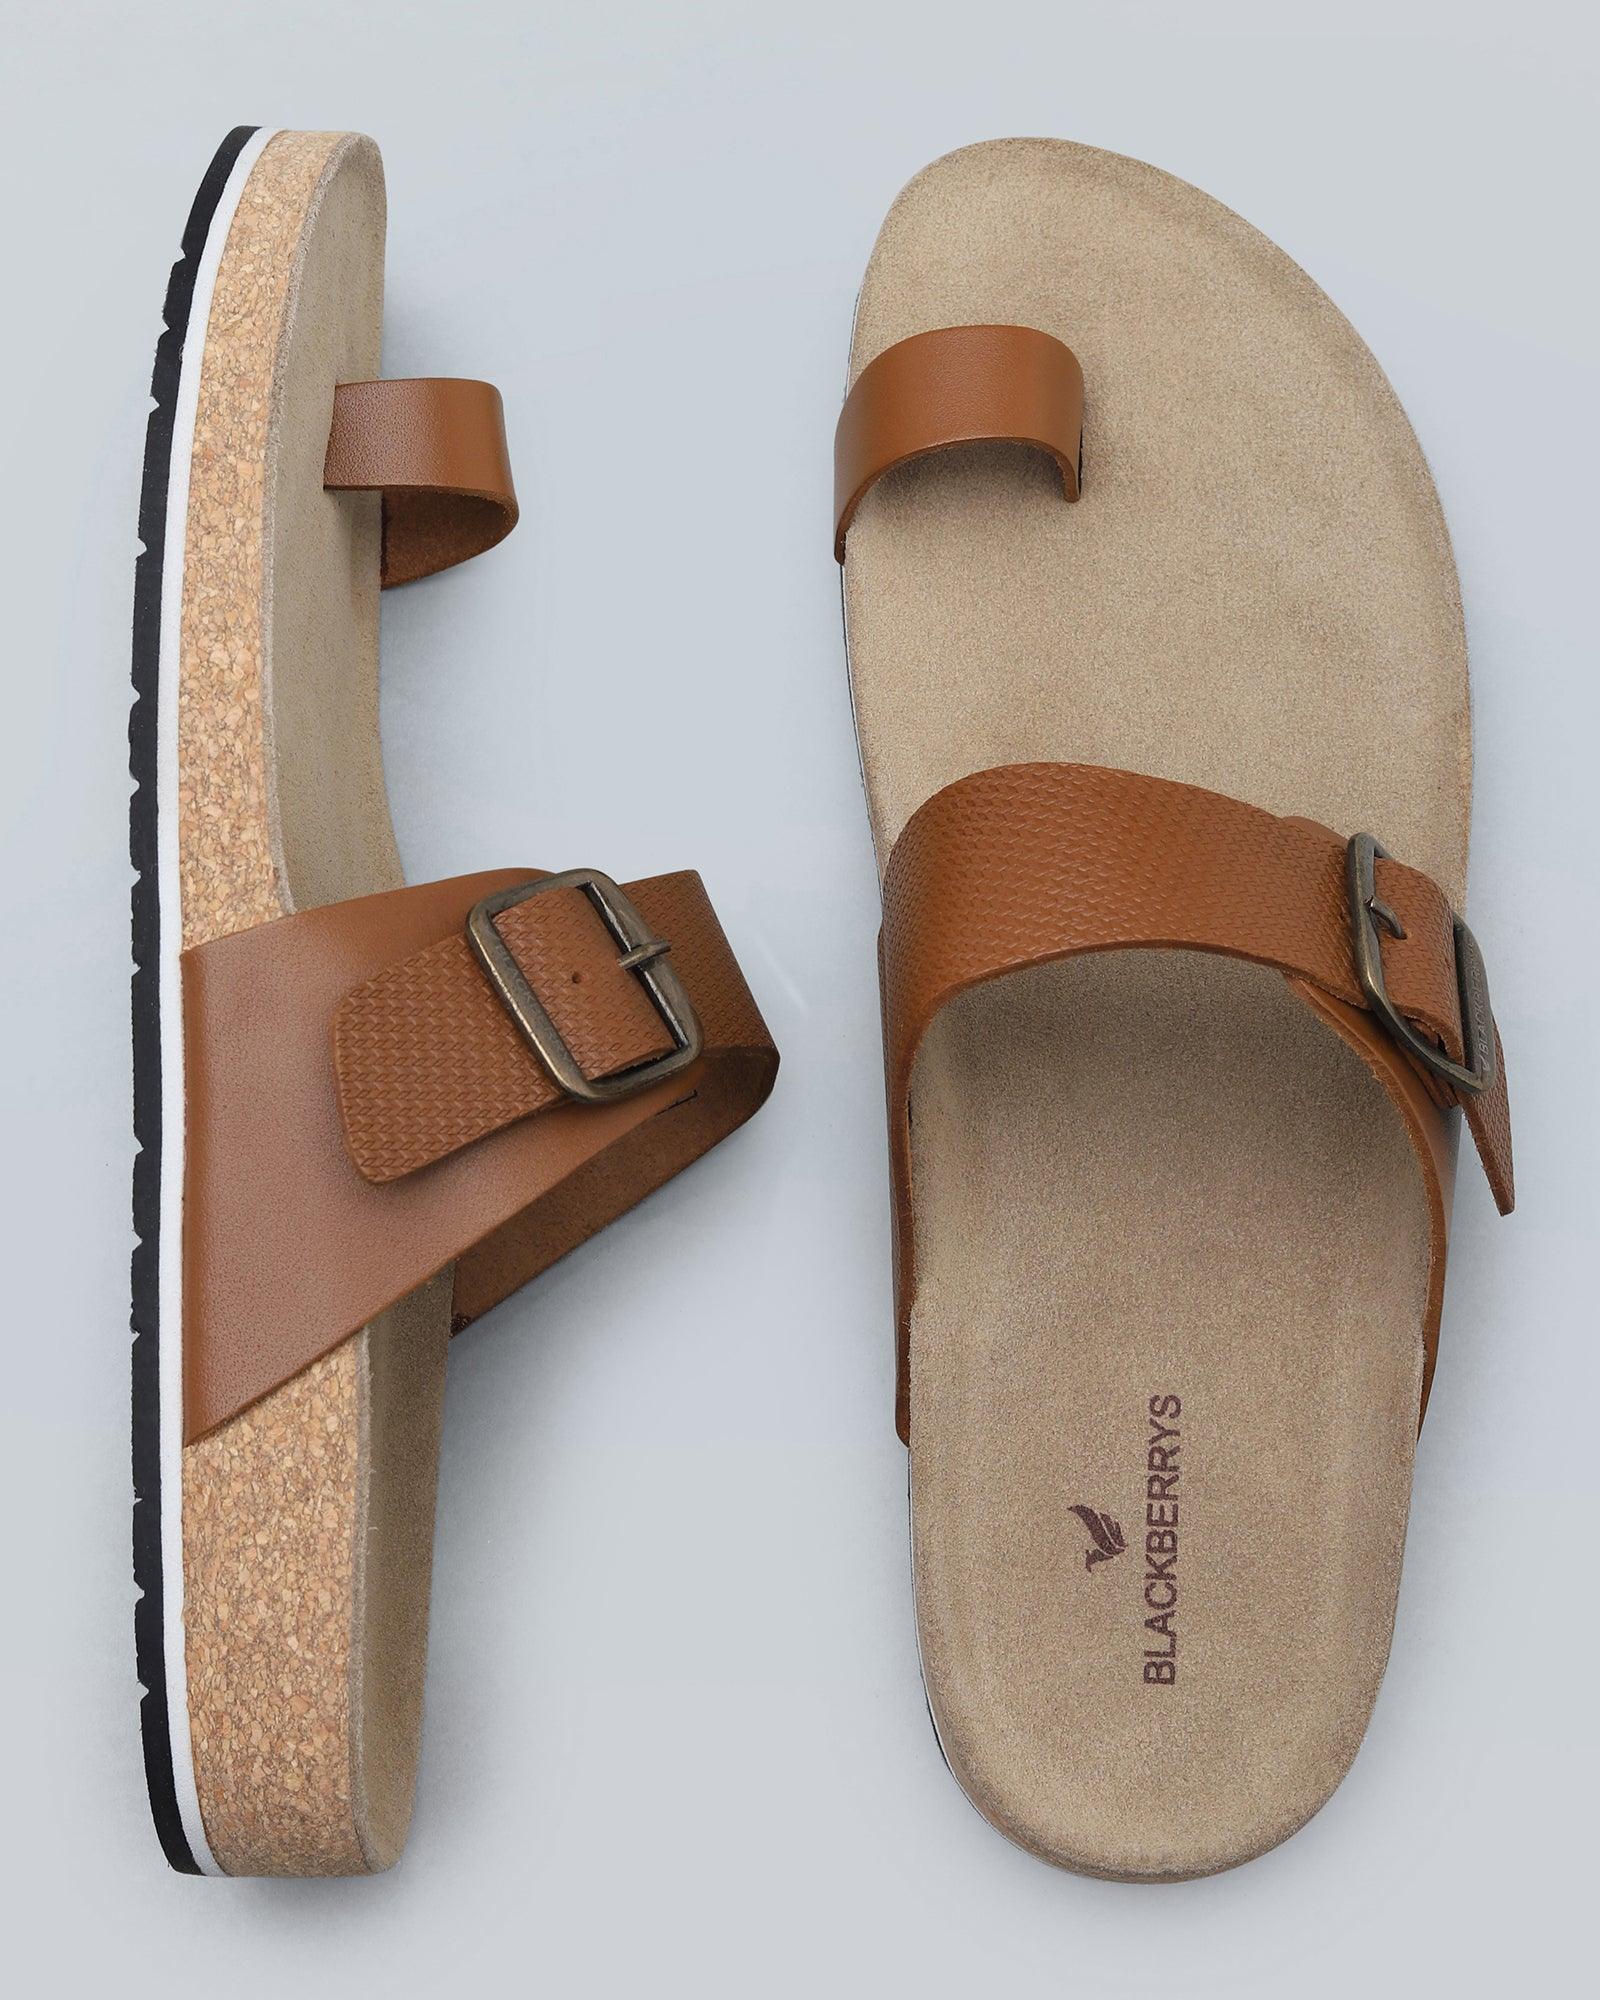 Leather Tan Textured Open Sandals - Nocia